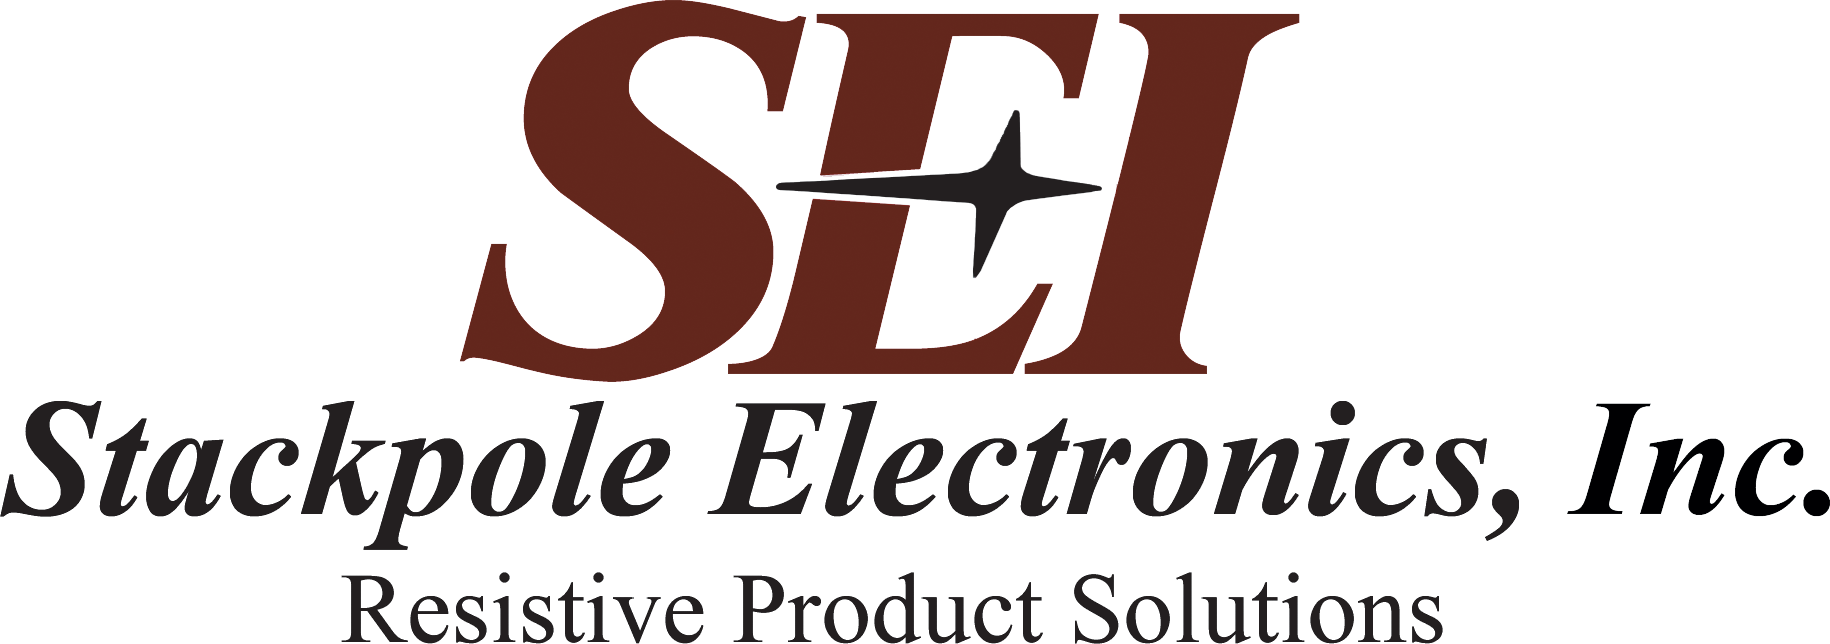 Stackpole Electronics Inc